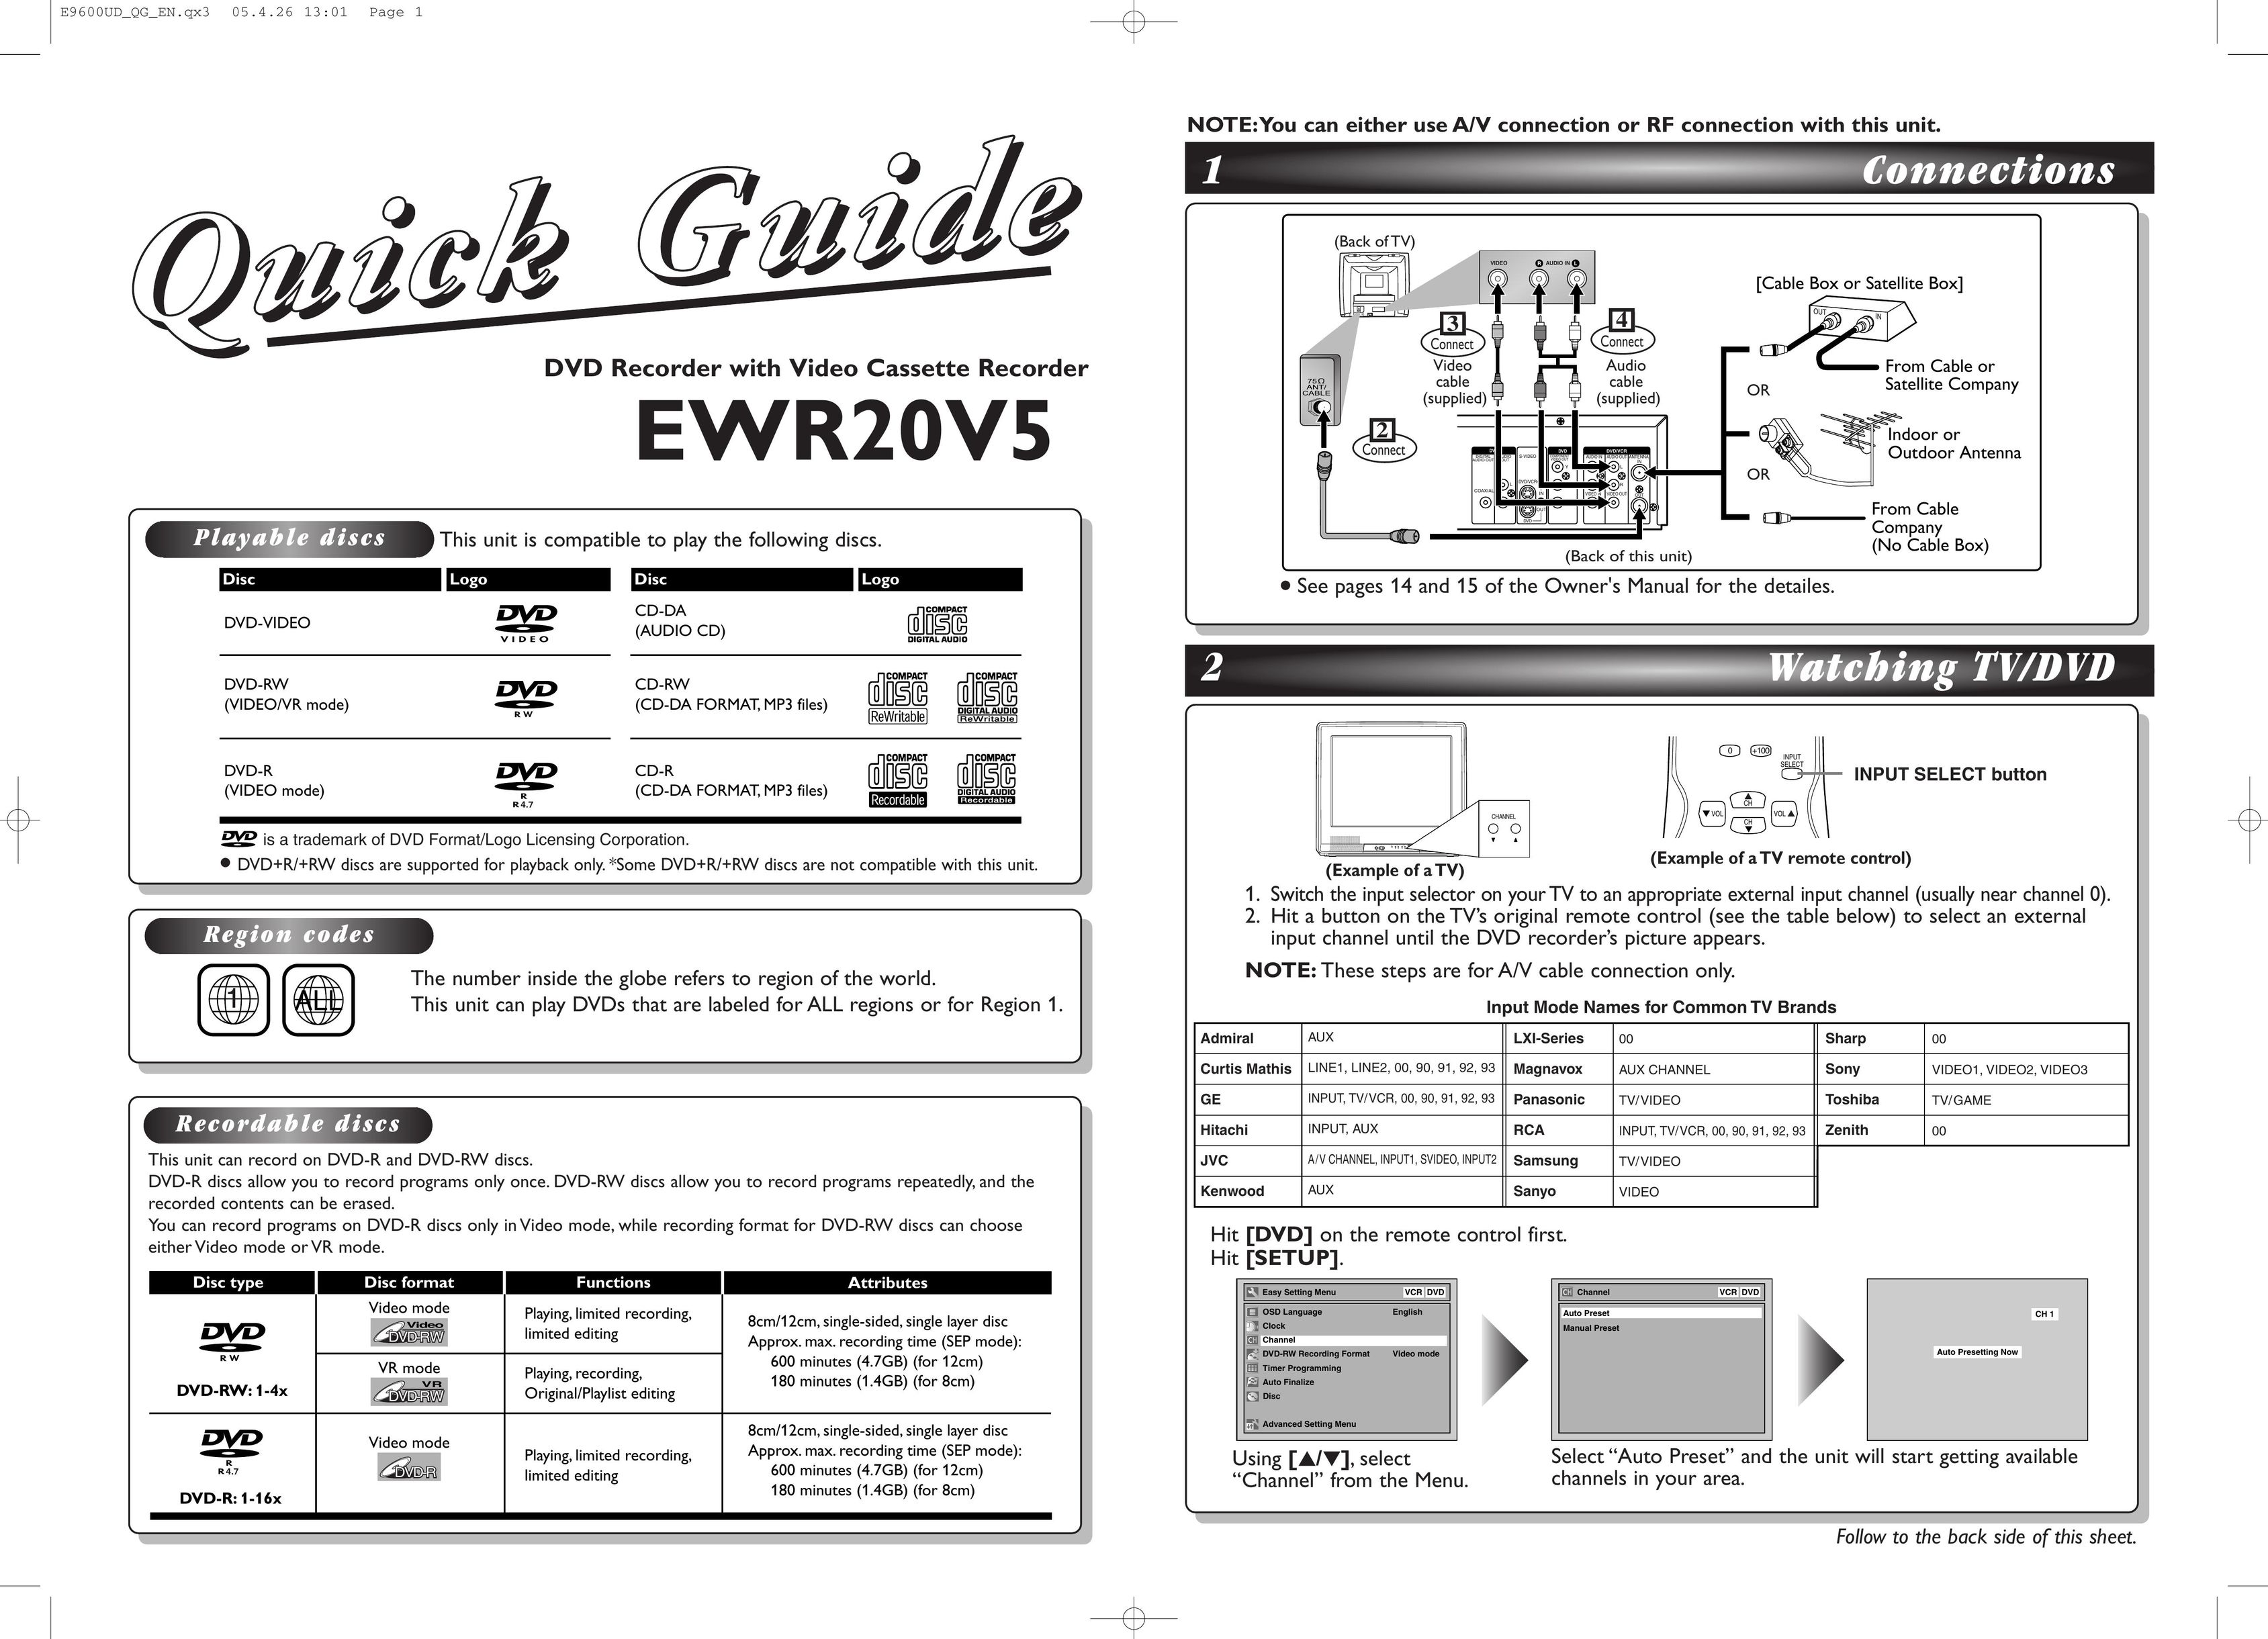 Emerson EWR20V5 DVD VCR Combo User Manual